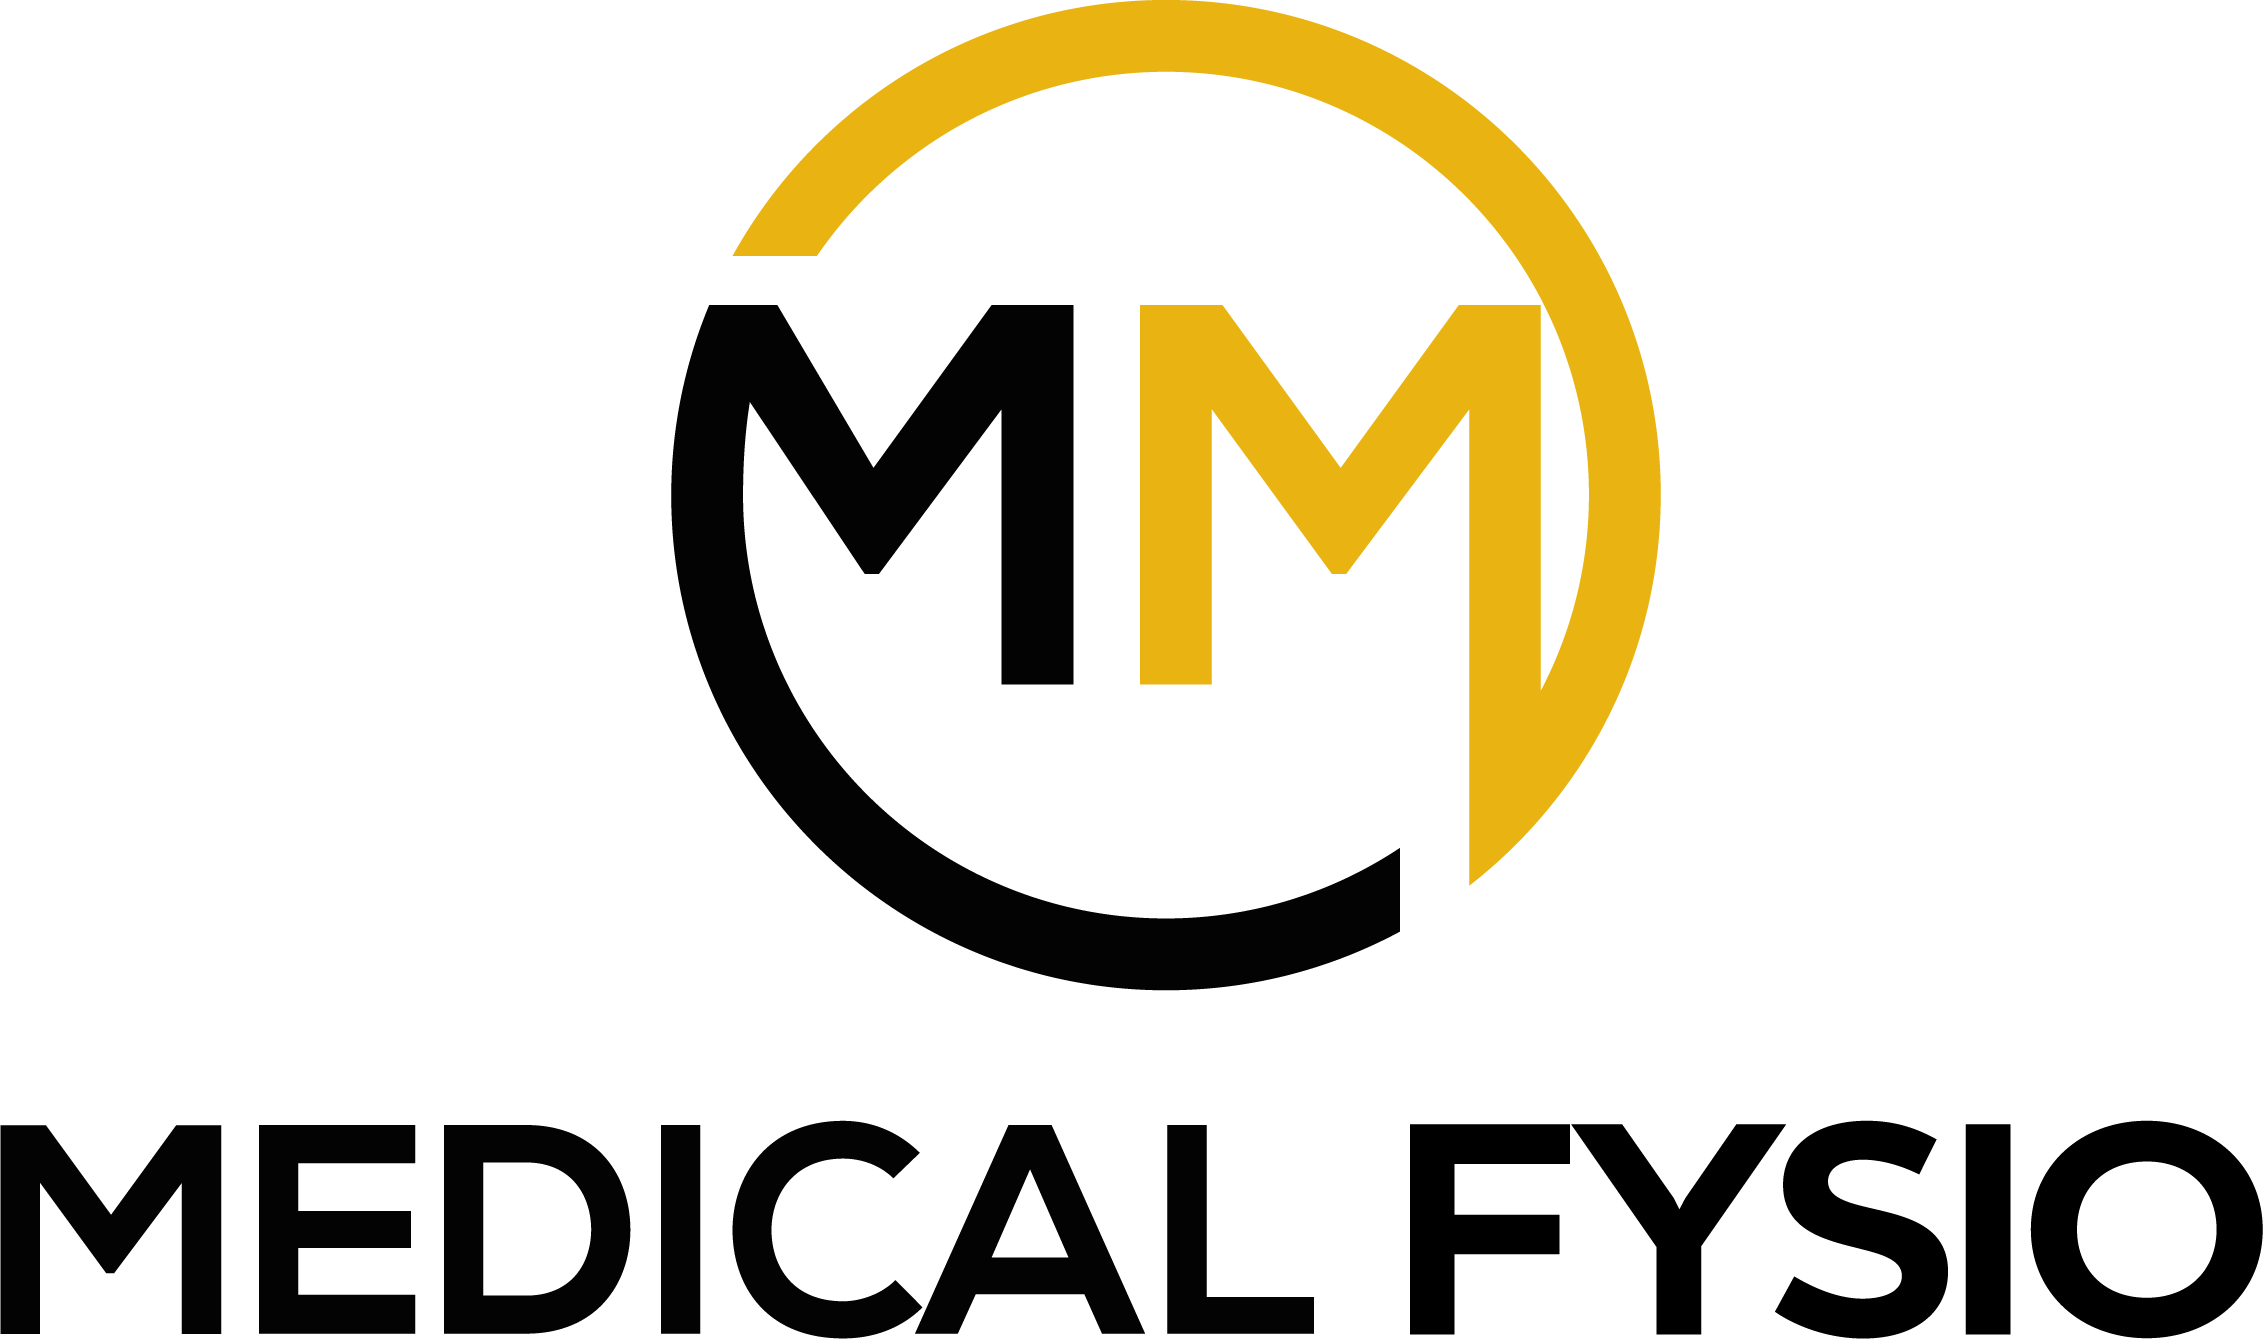 Logo van medical move met daaronder de tekst 'Medical fysio'.